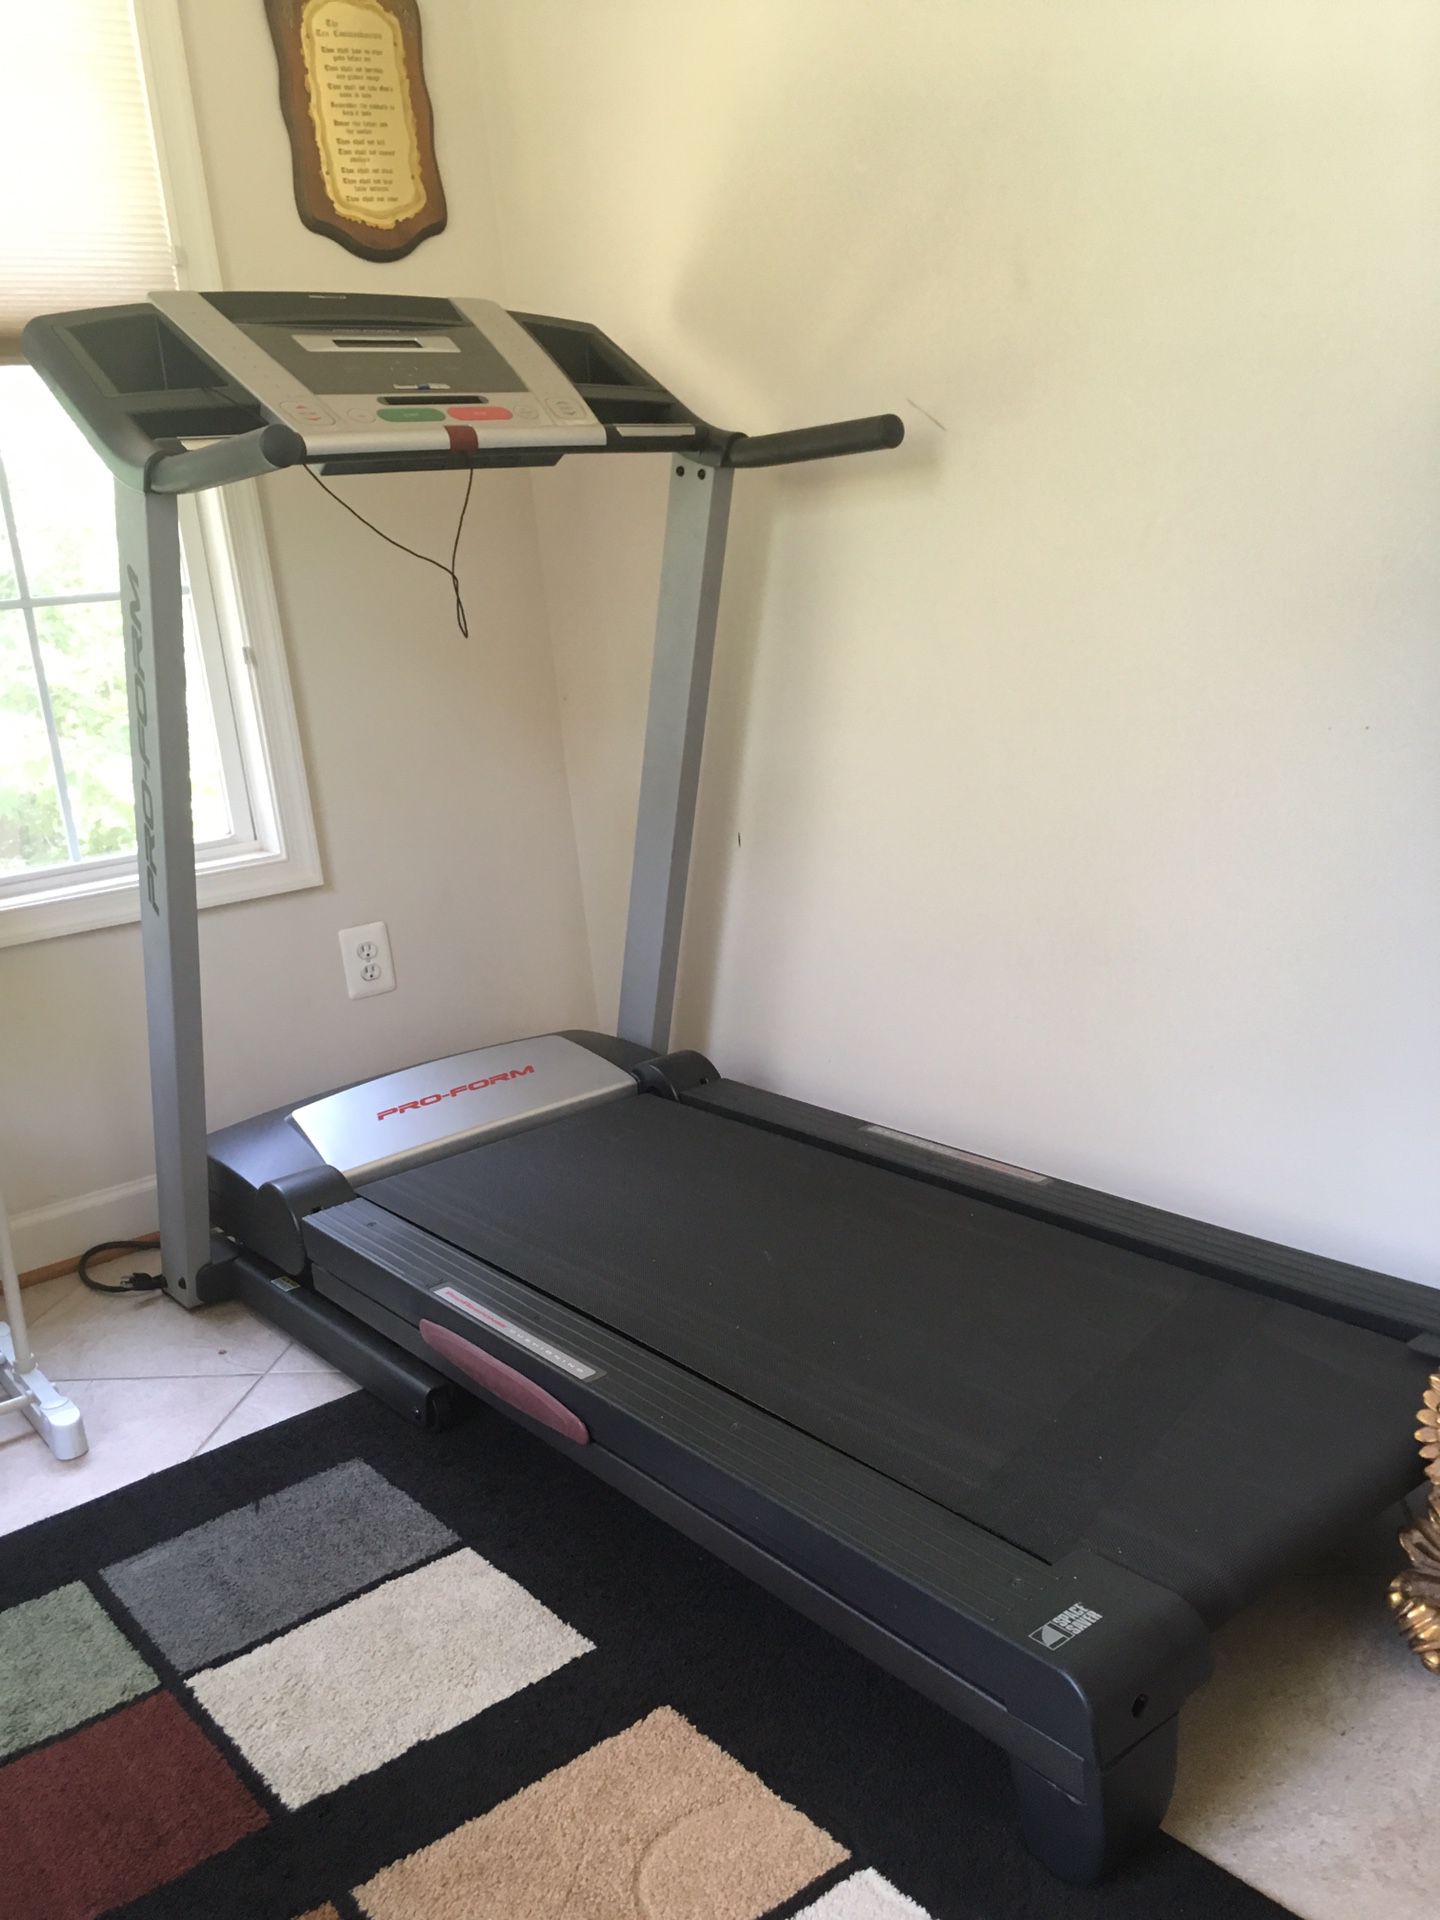 Proform treadmill brand new